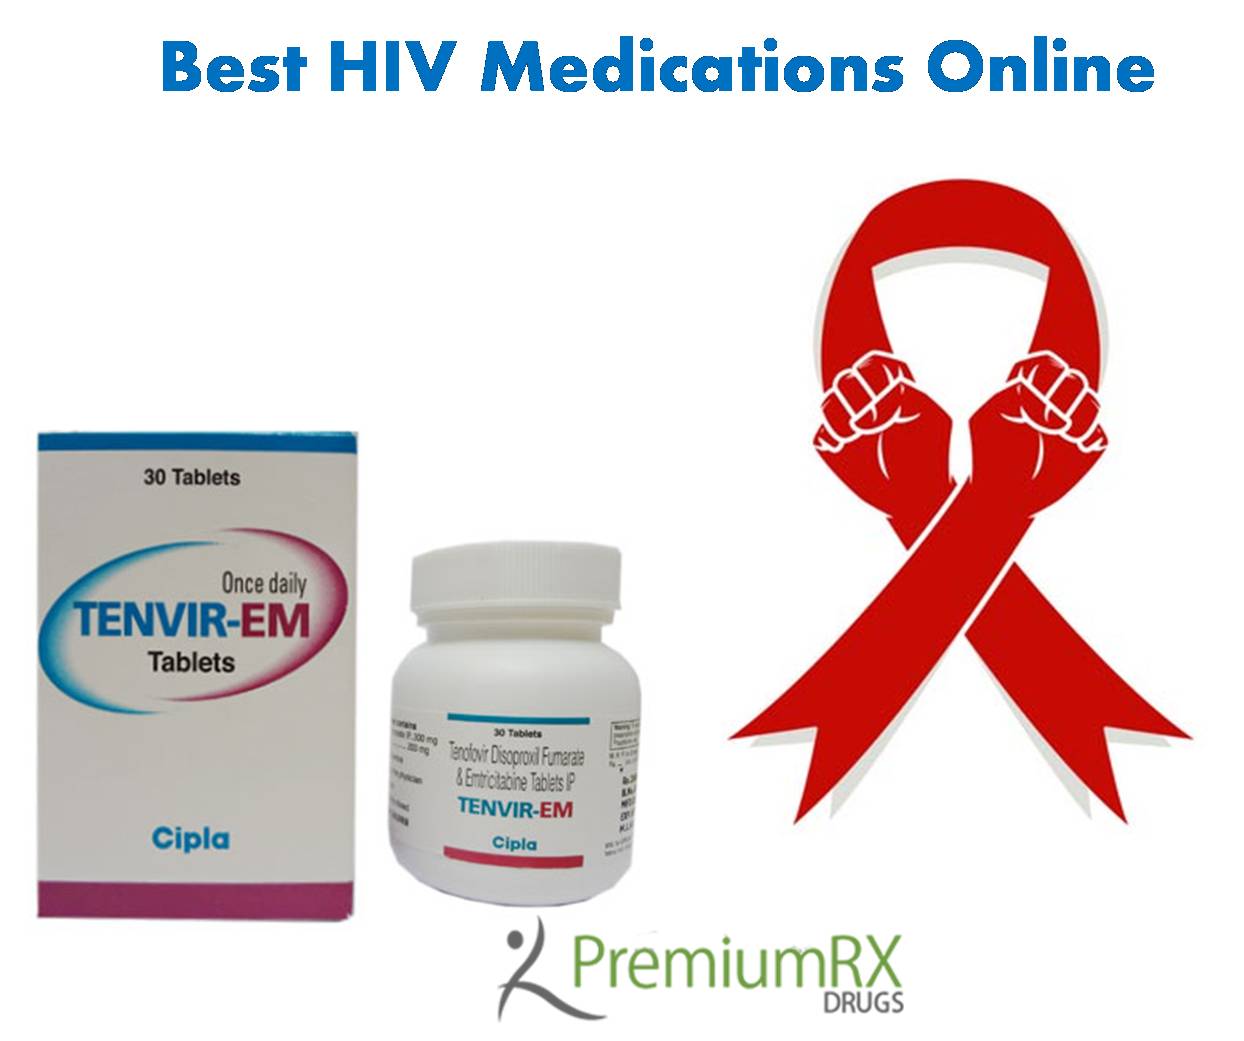 Best HIV Medications Online